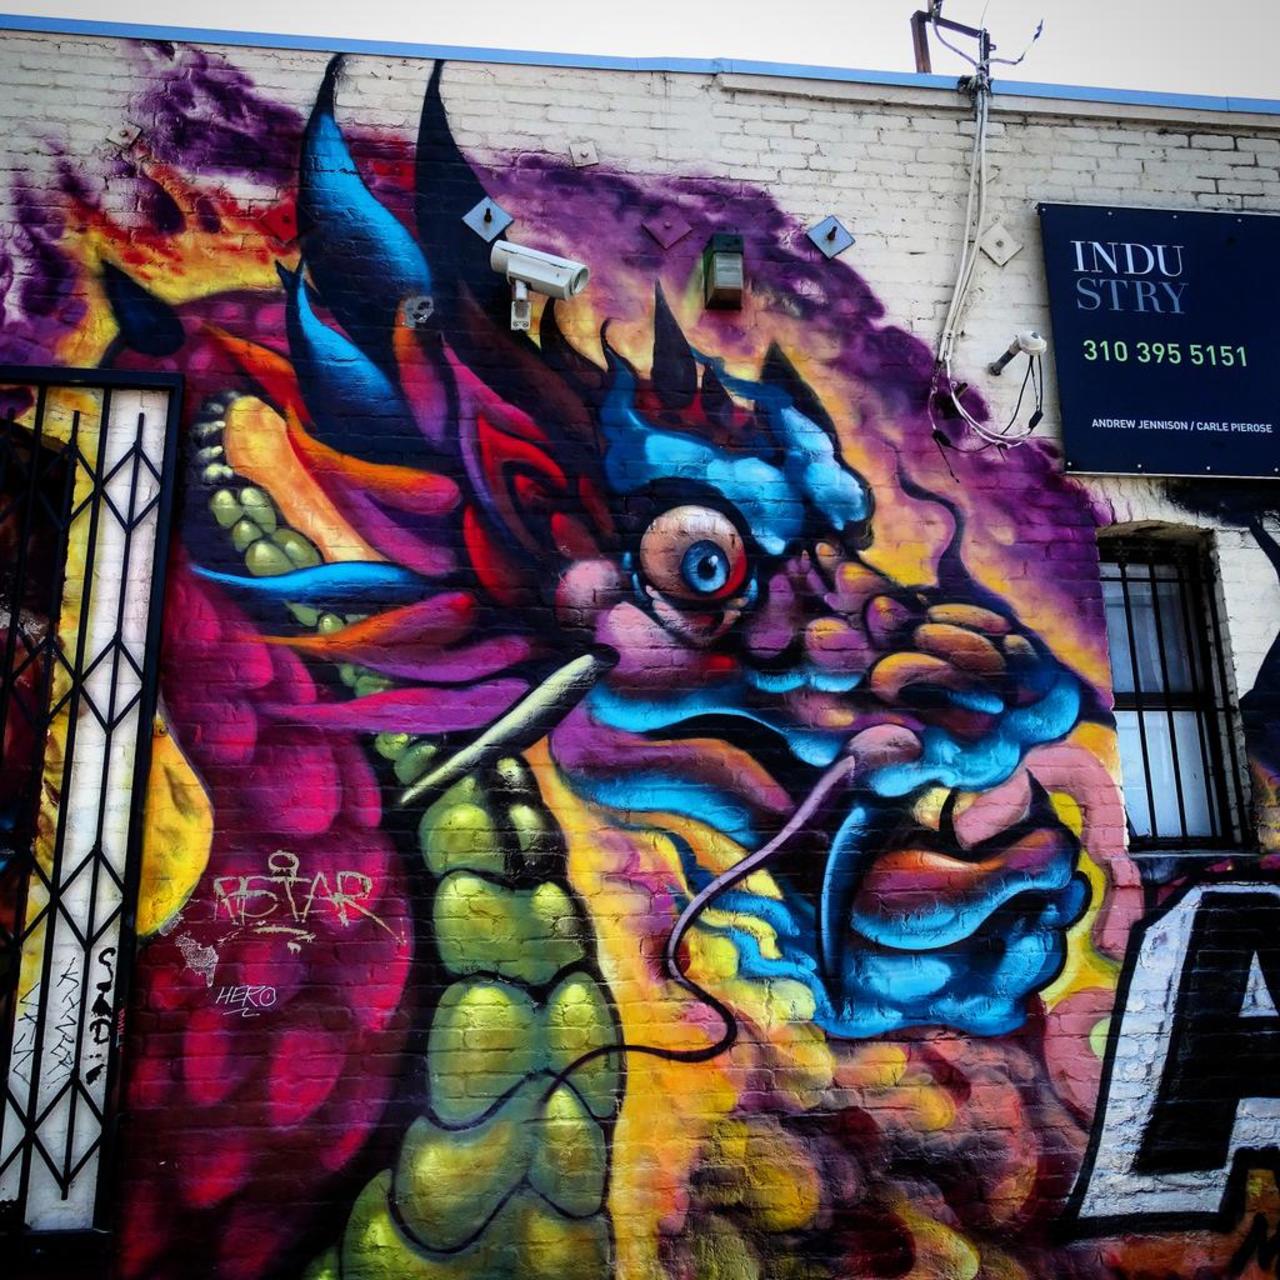 Random dragon#art #streetart #mural #losangeles #artsdistrict #california #monster #serpent #colorful #graffiti https://t.co/wCUOa9KBDz